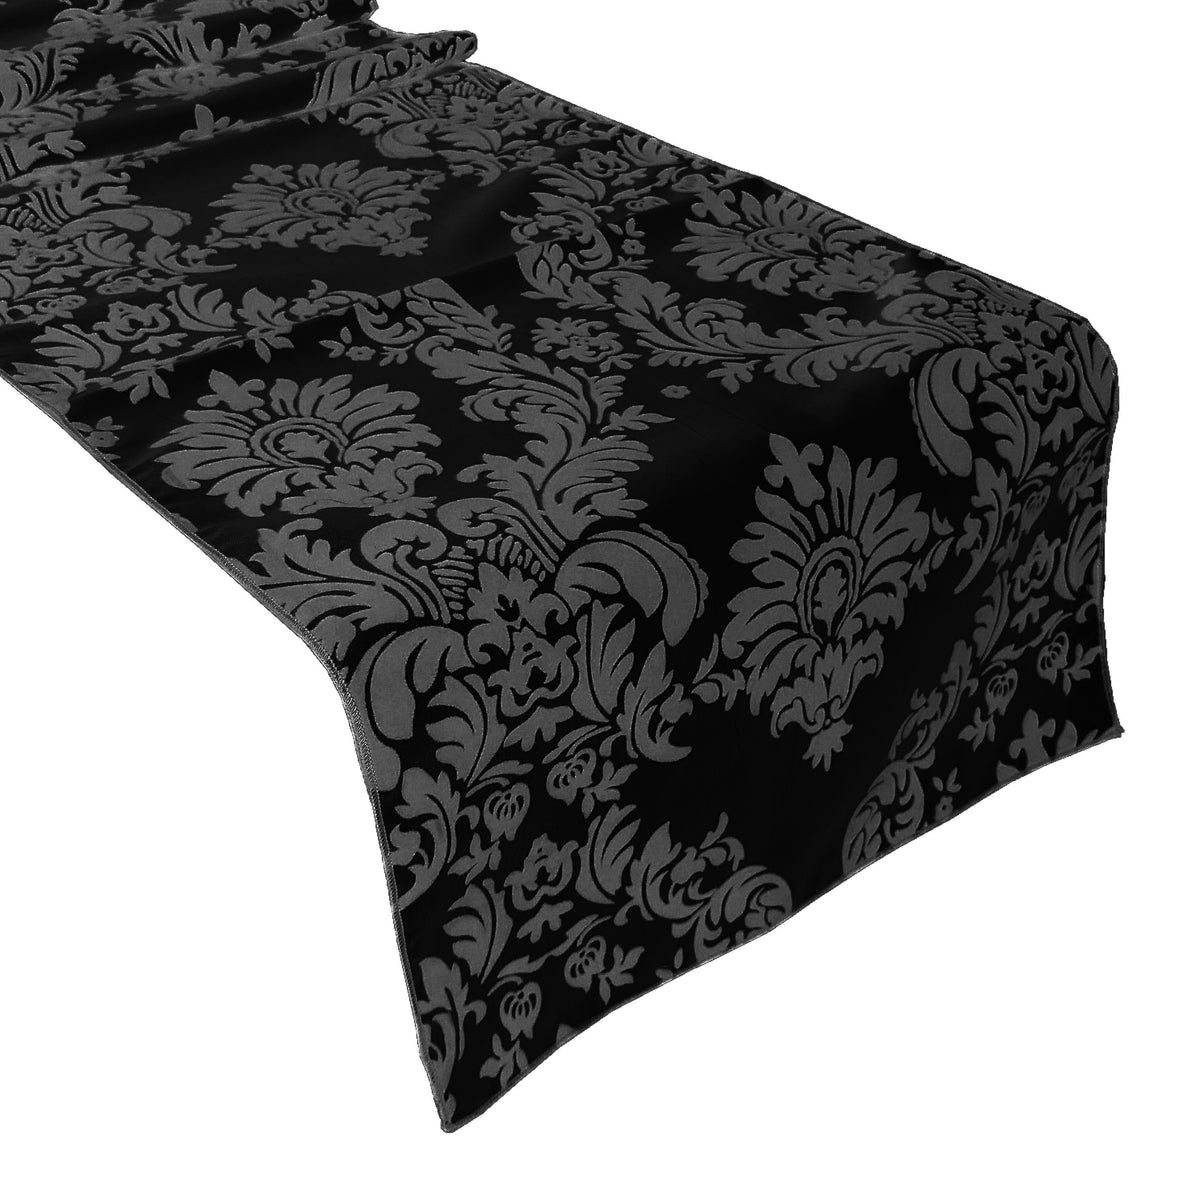 Elegant Handmade Grey Leaf Black Damask Tassel Wedding Party Bed Table Runner Cloth 80 inch Approx JH table runner COMINHKPR91823 